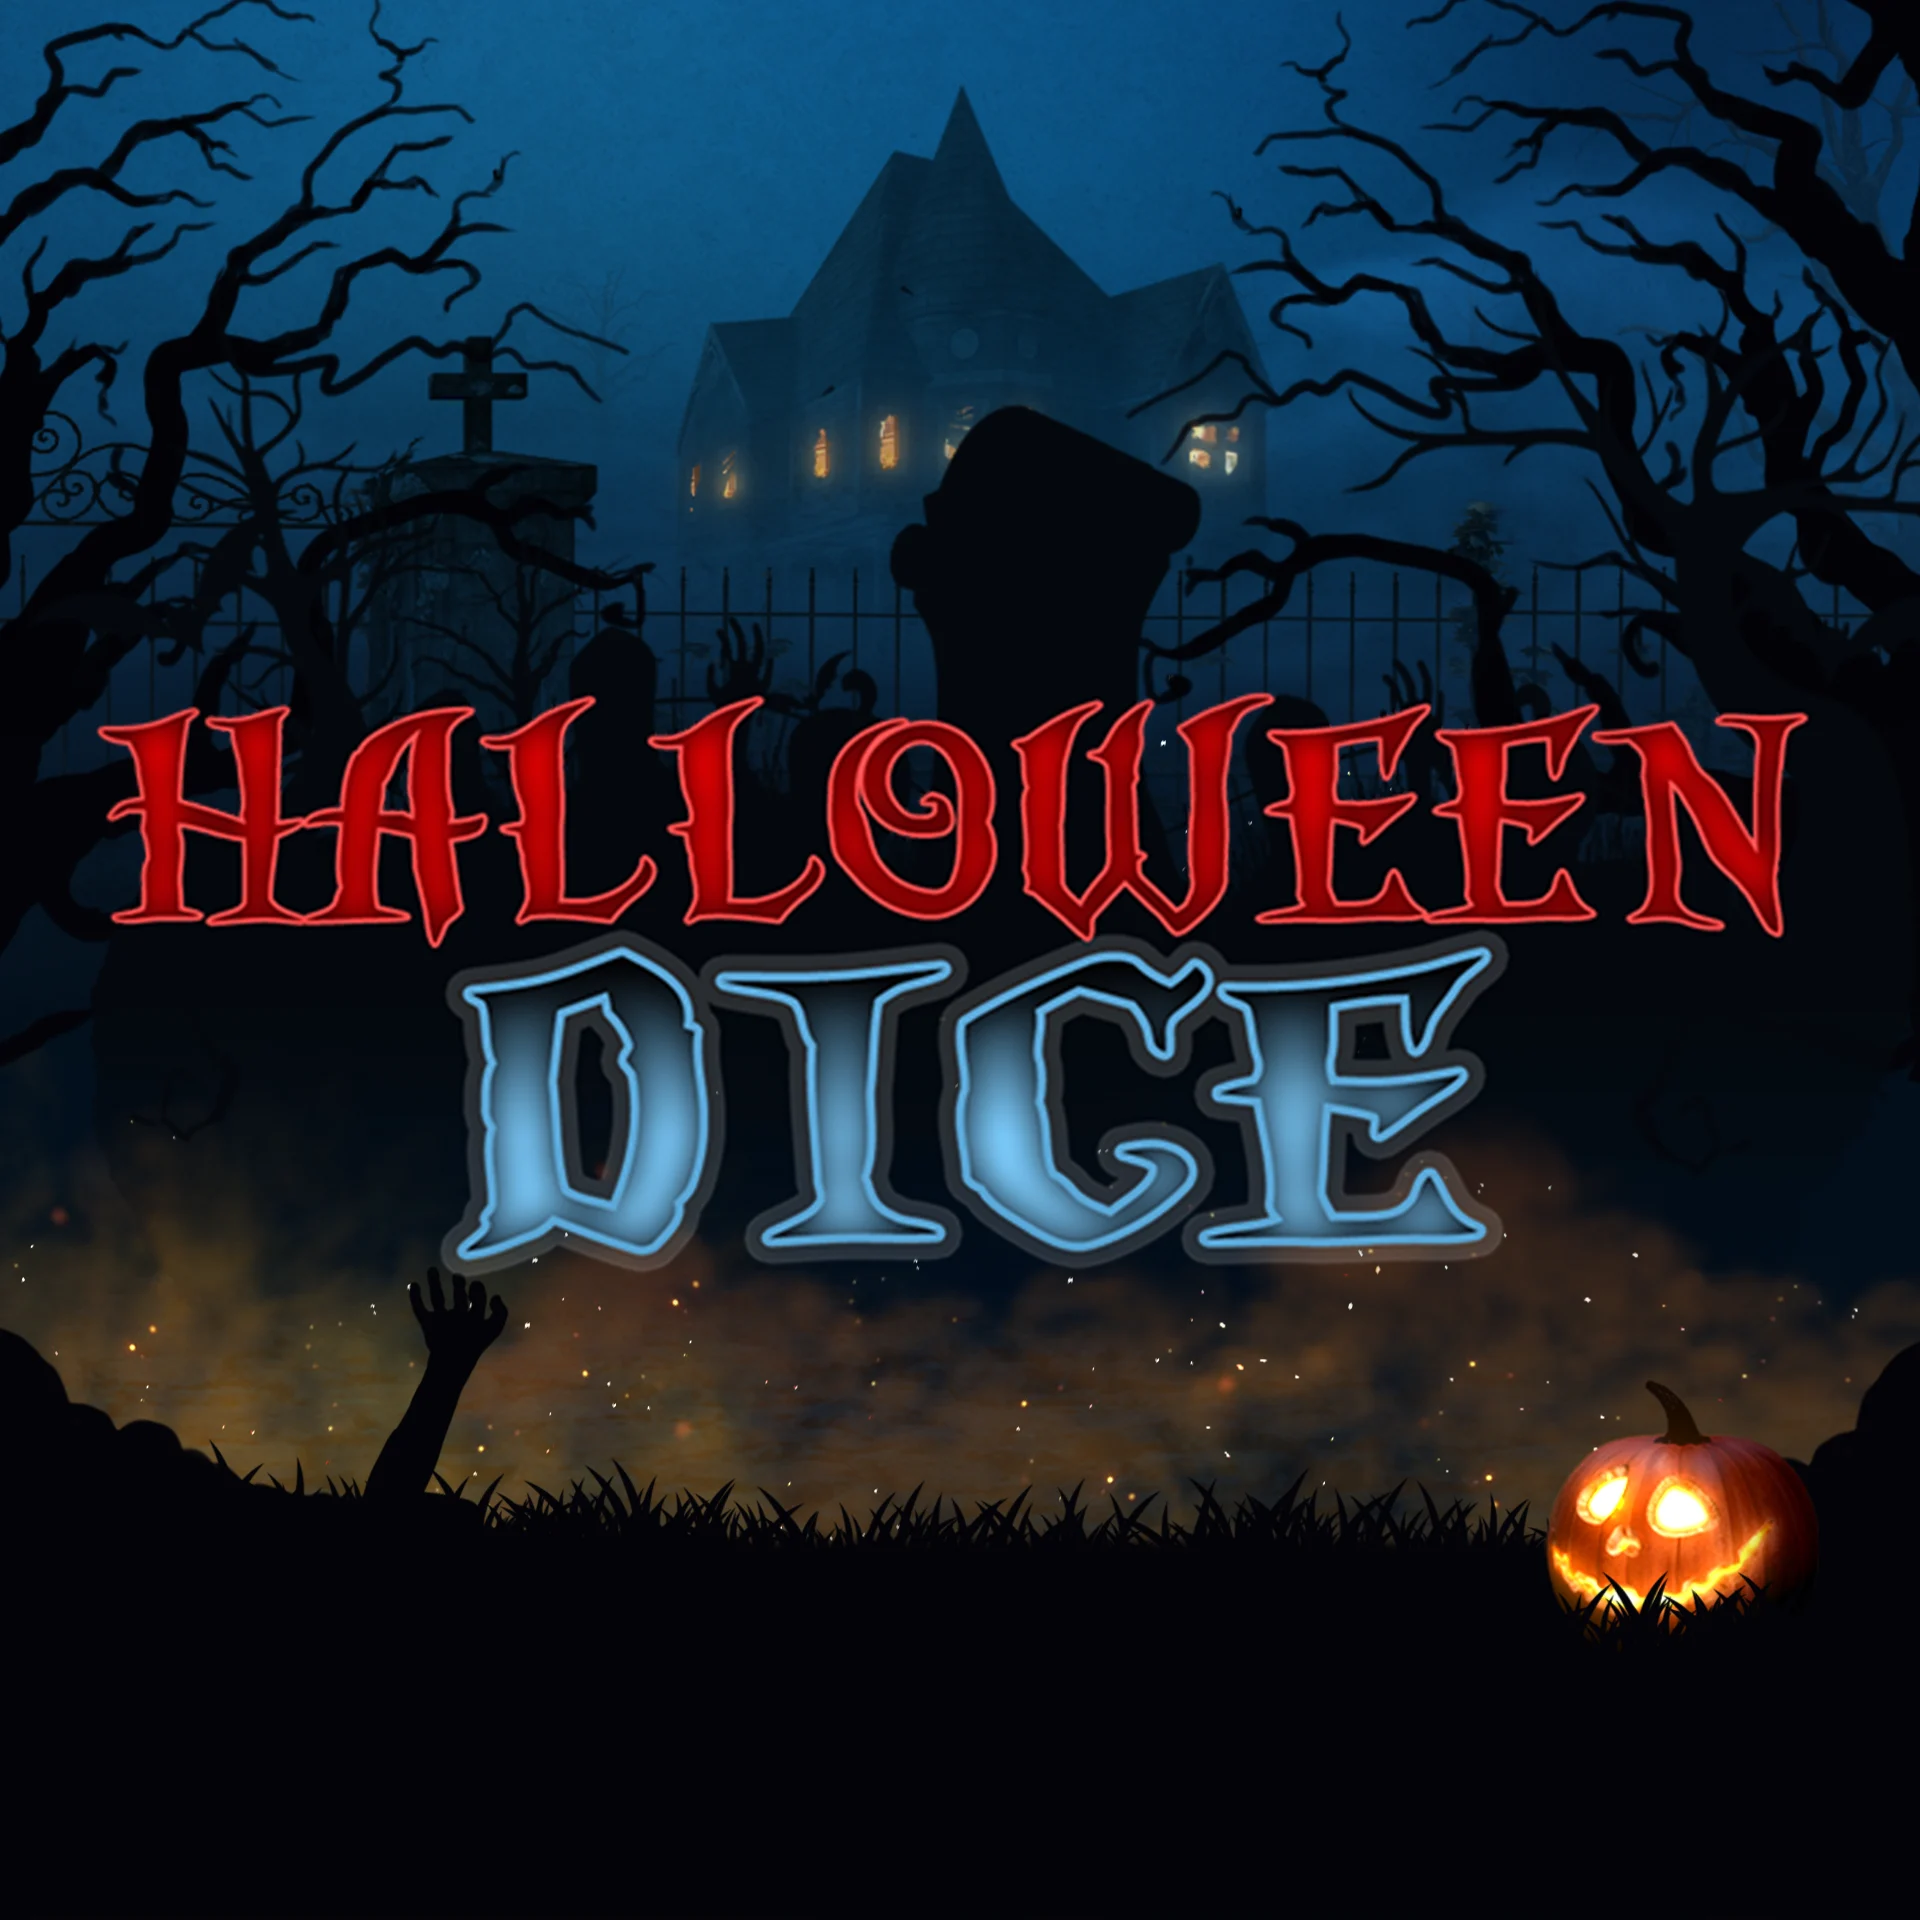 Play Halloween Dice on Starcasinodice online casino